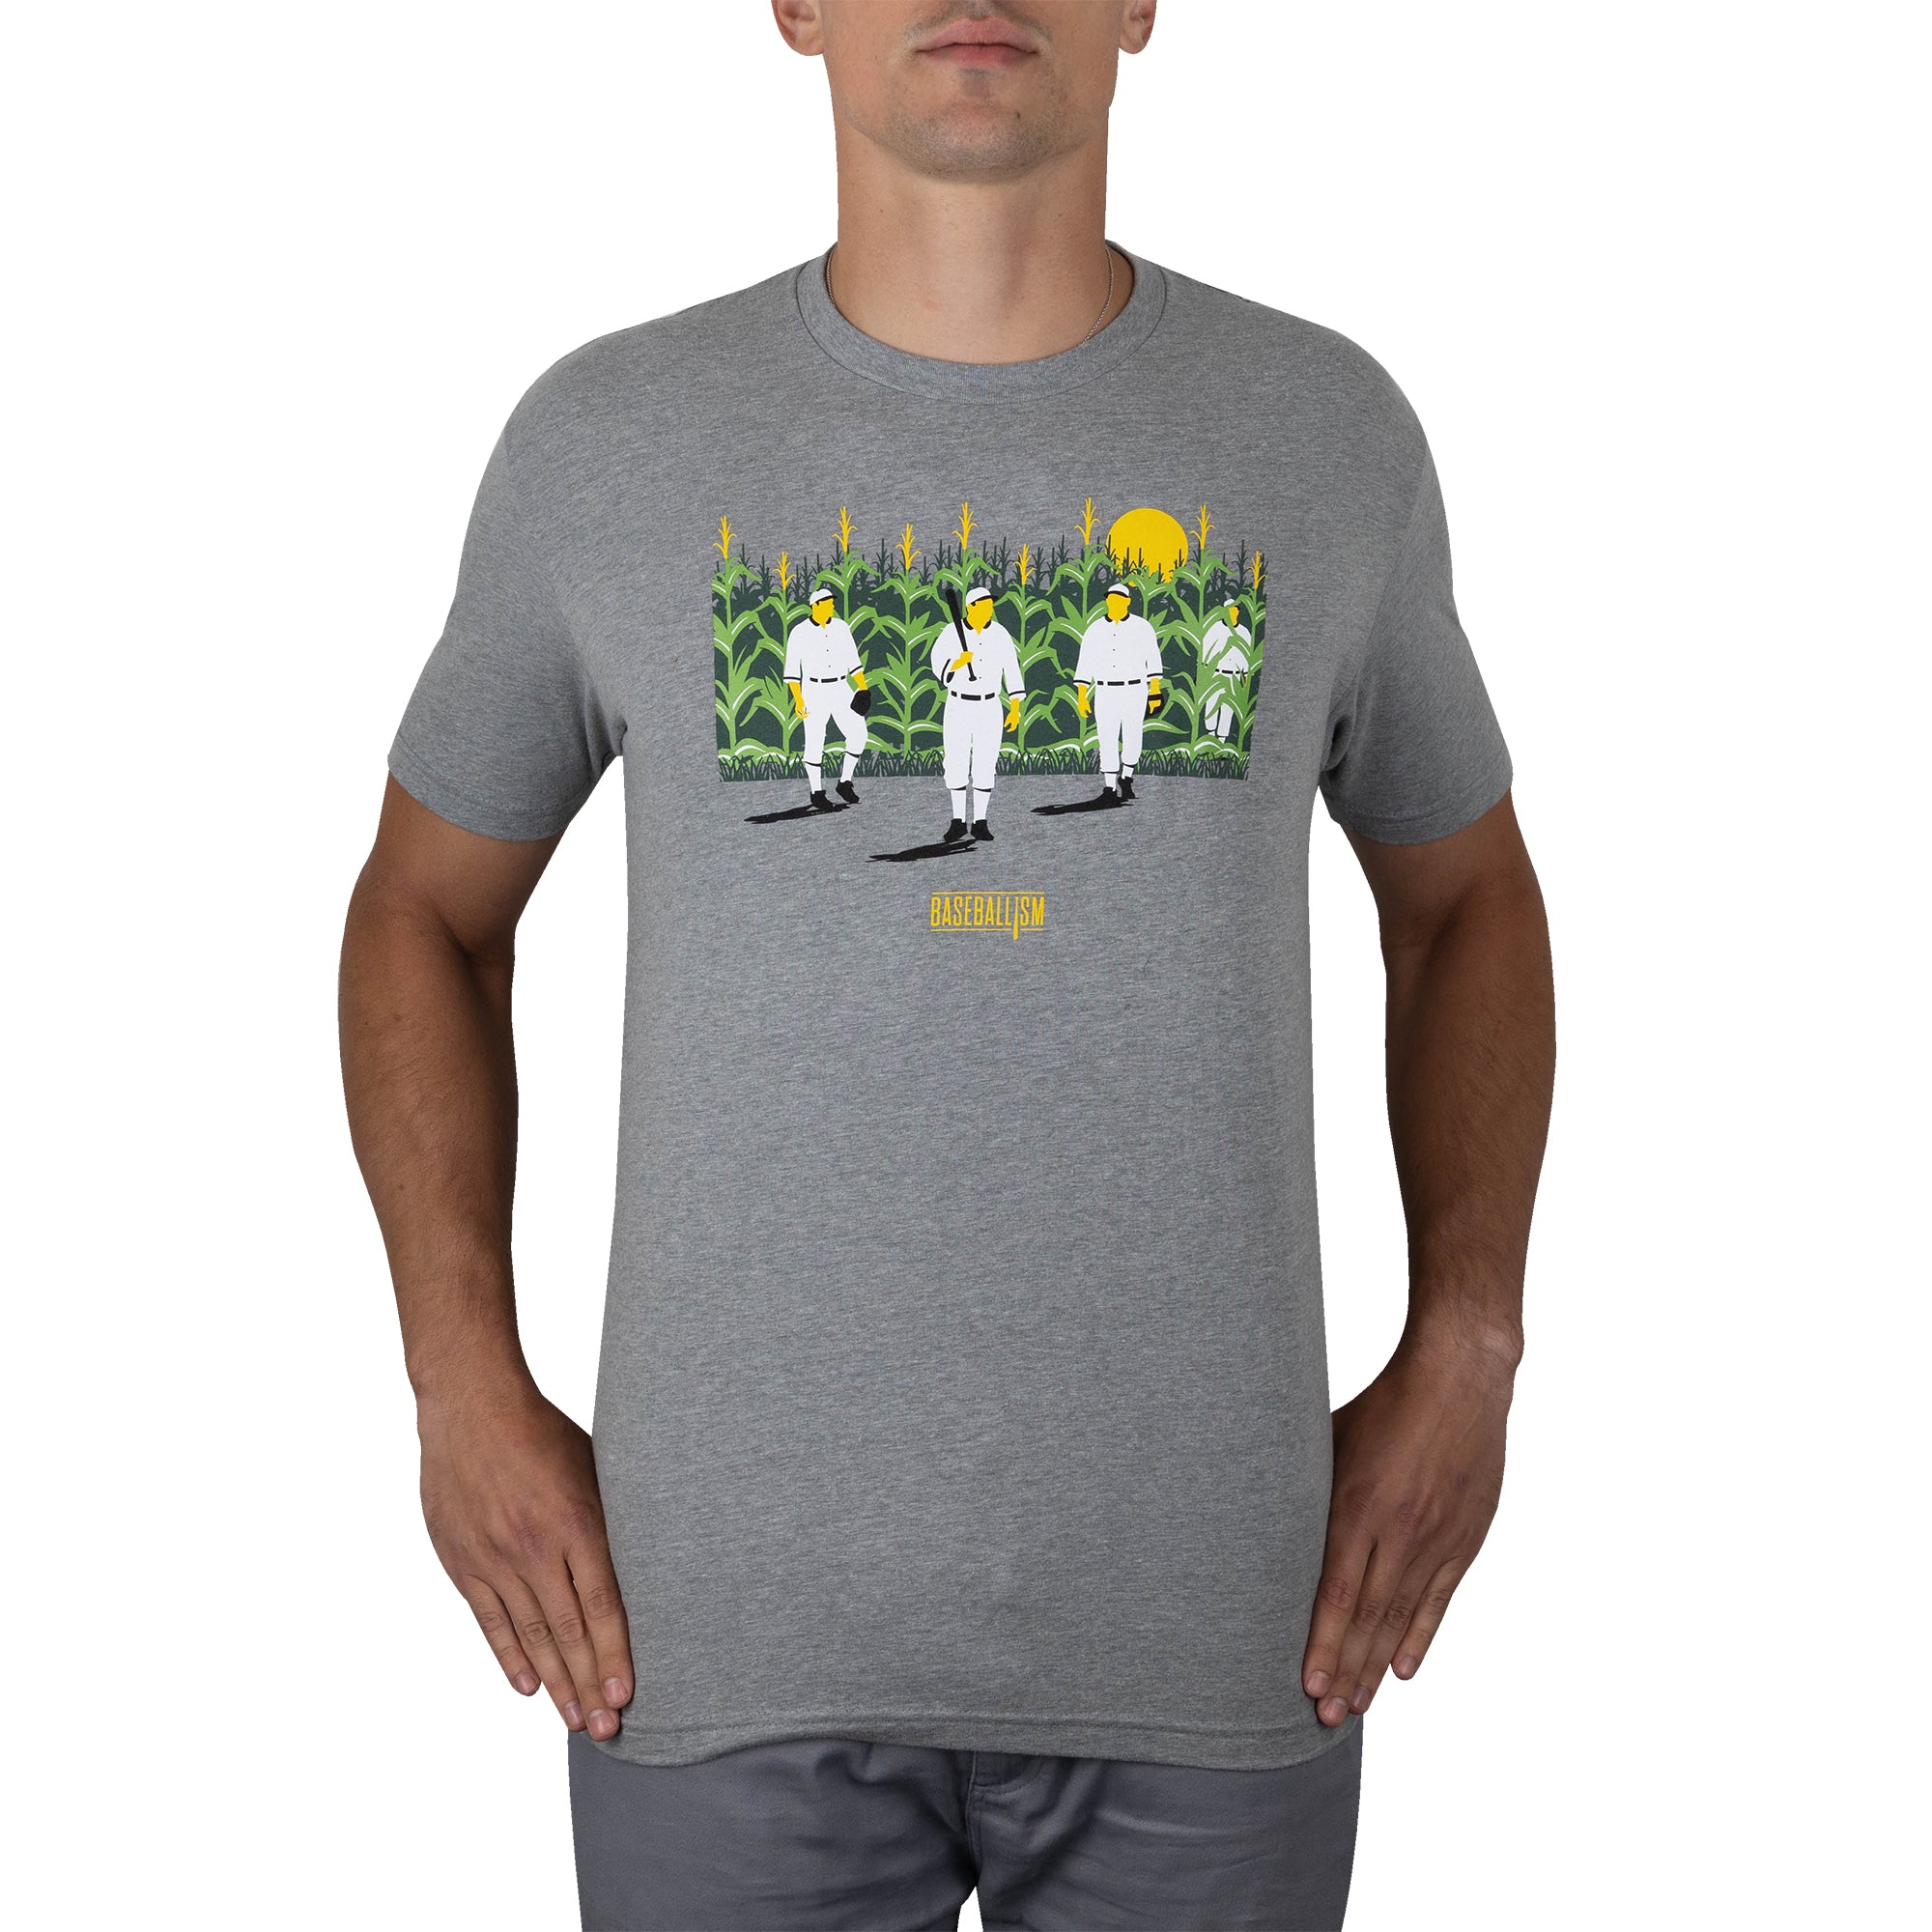 Field of Dreams - This Field T-Shirt | Baseballism x Field of Dreams 3XL